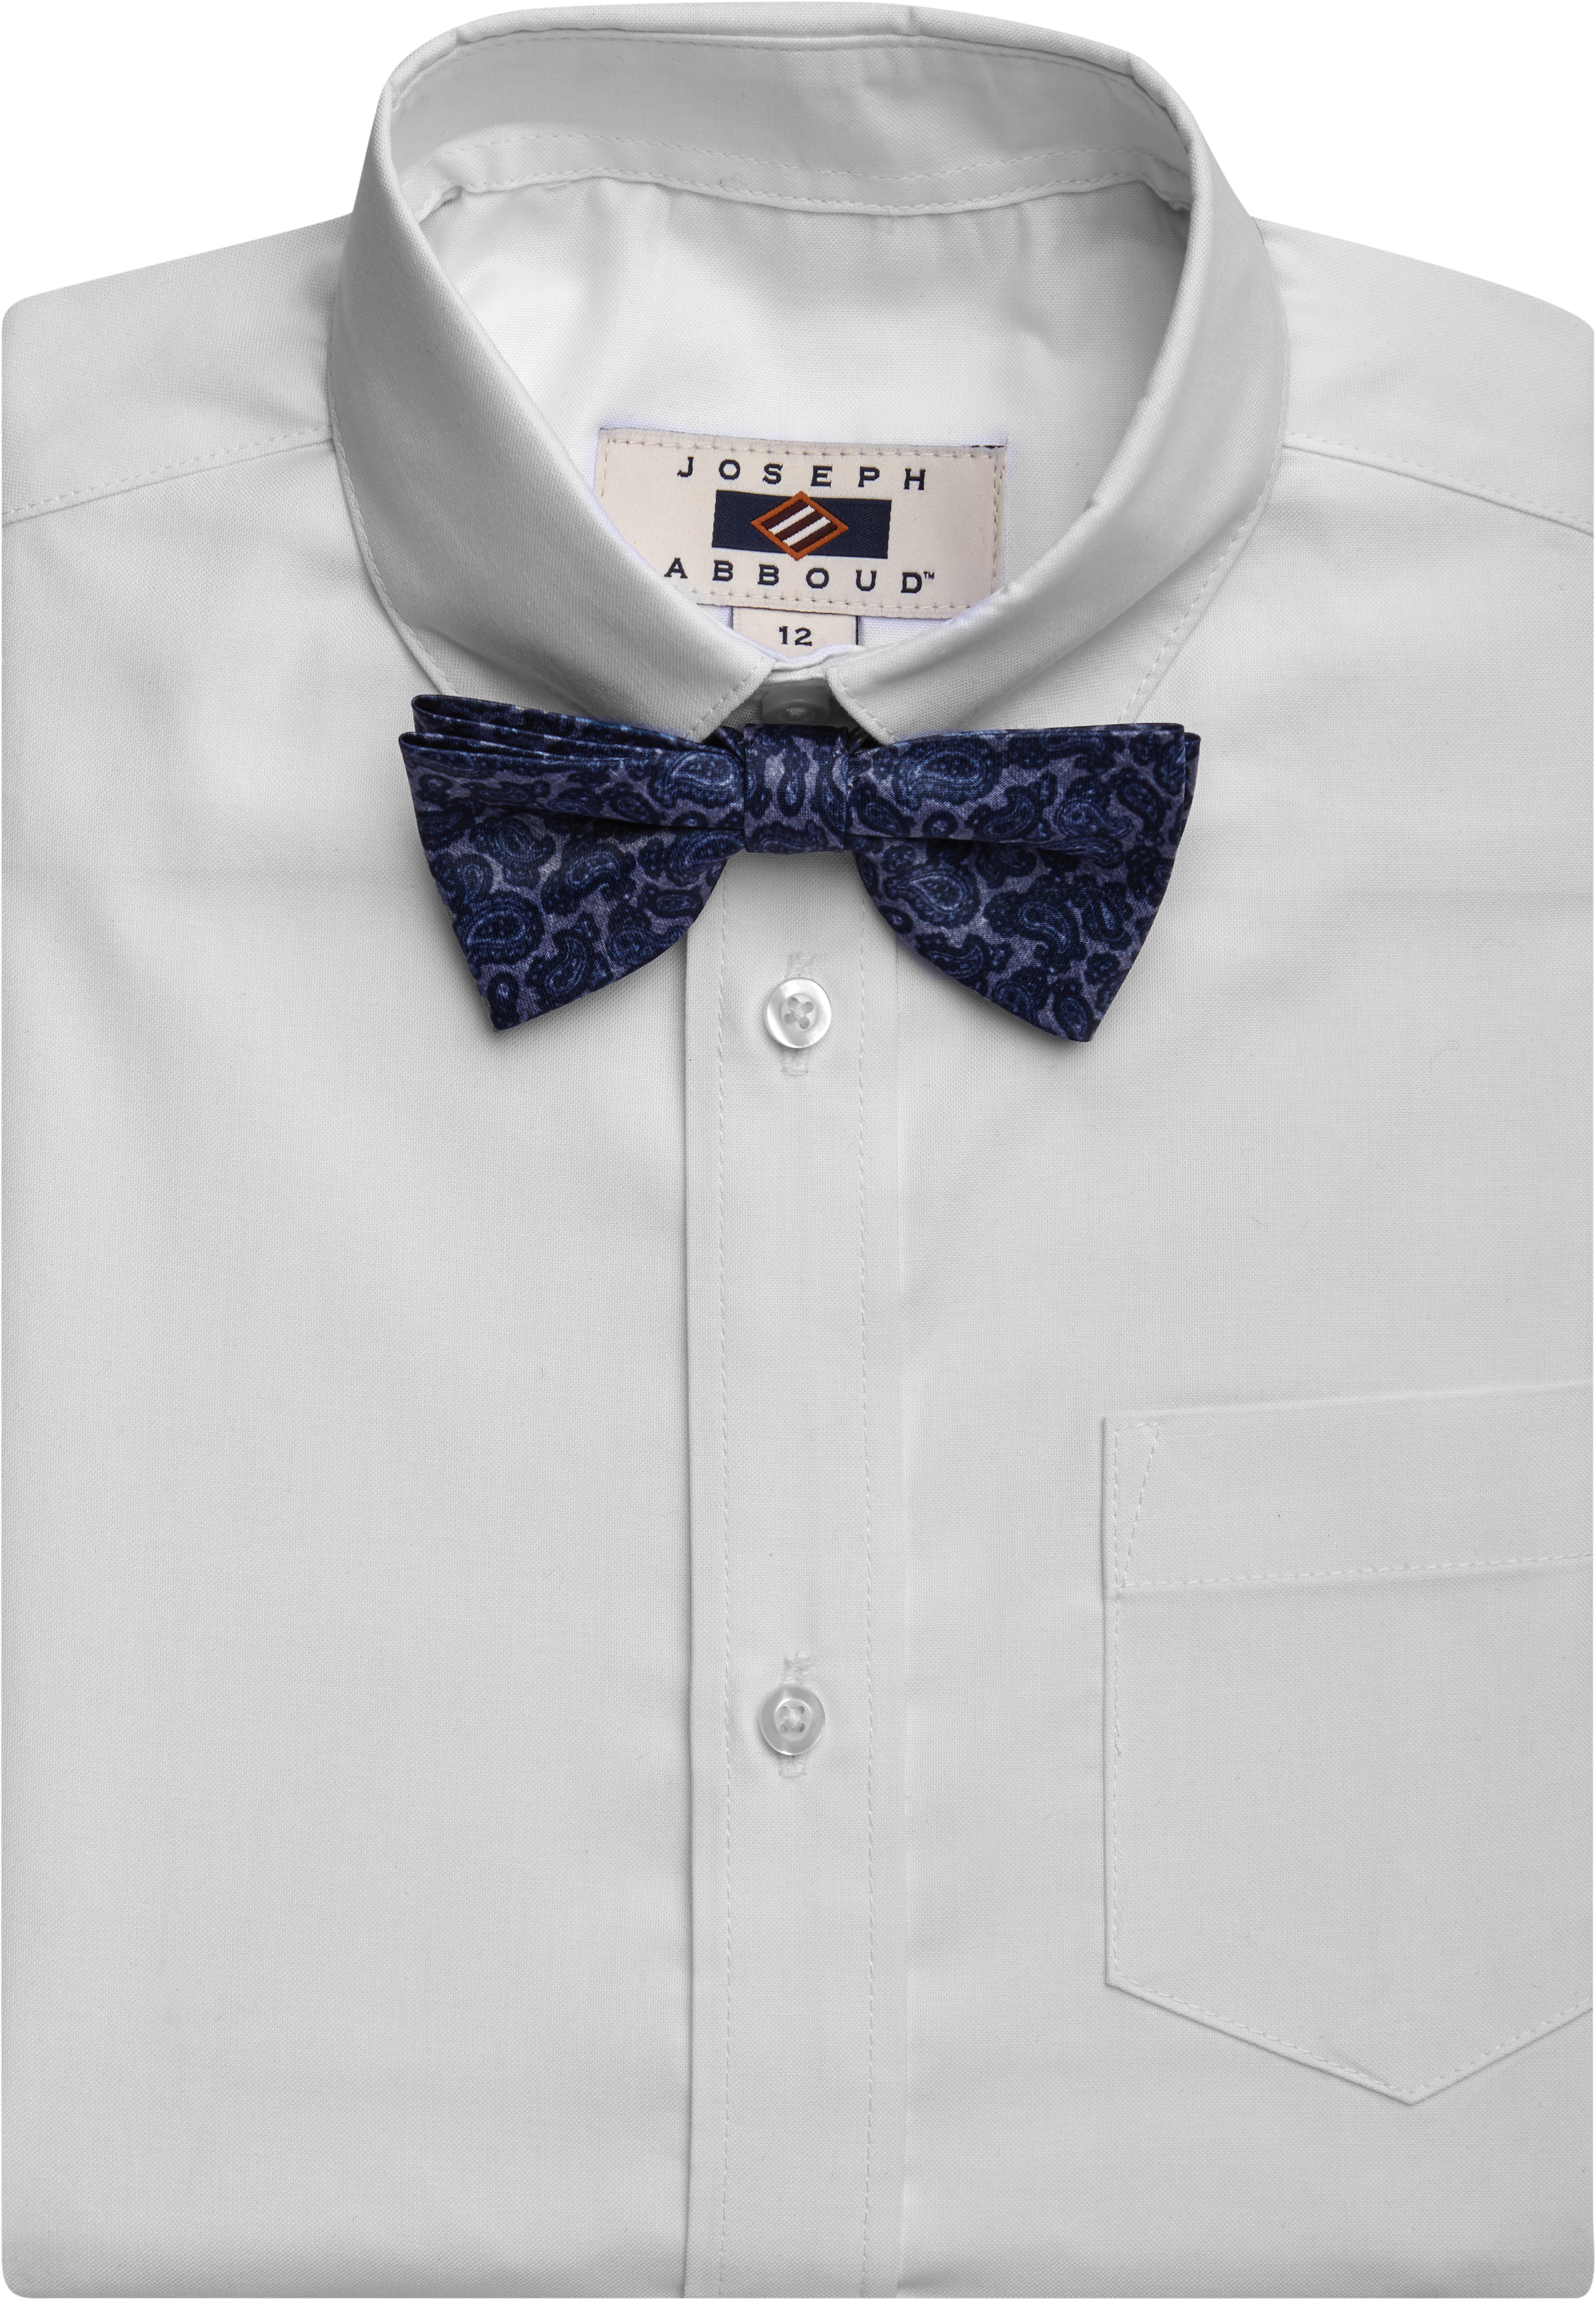 Joseph Abboud Boys White Dress Shirt & Bow Tie Set - Men's Big & Tall ...